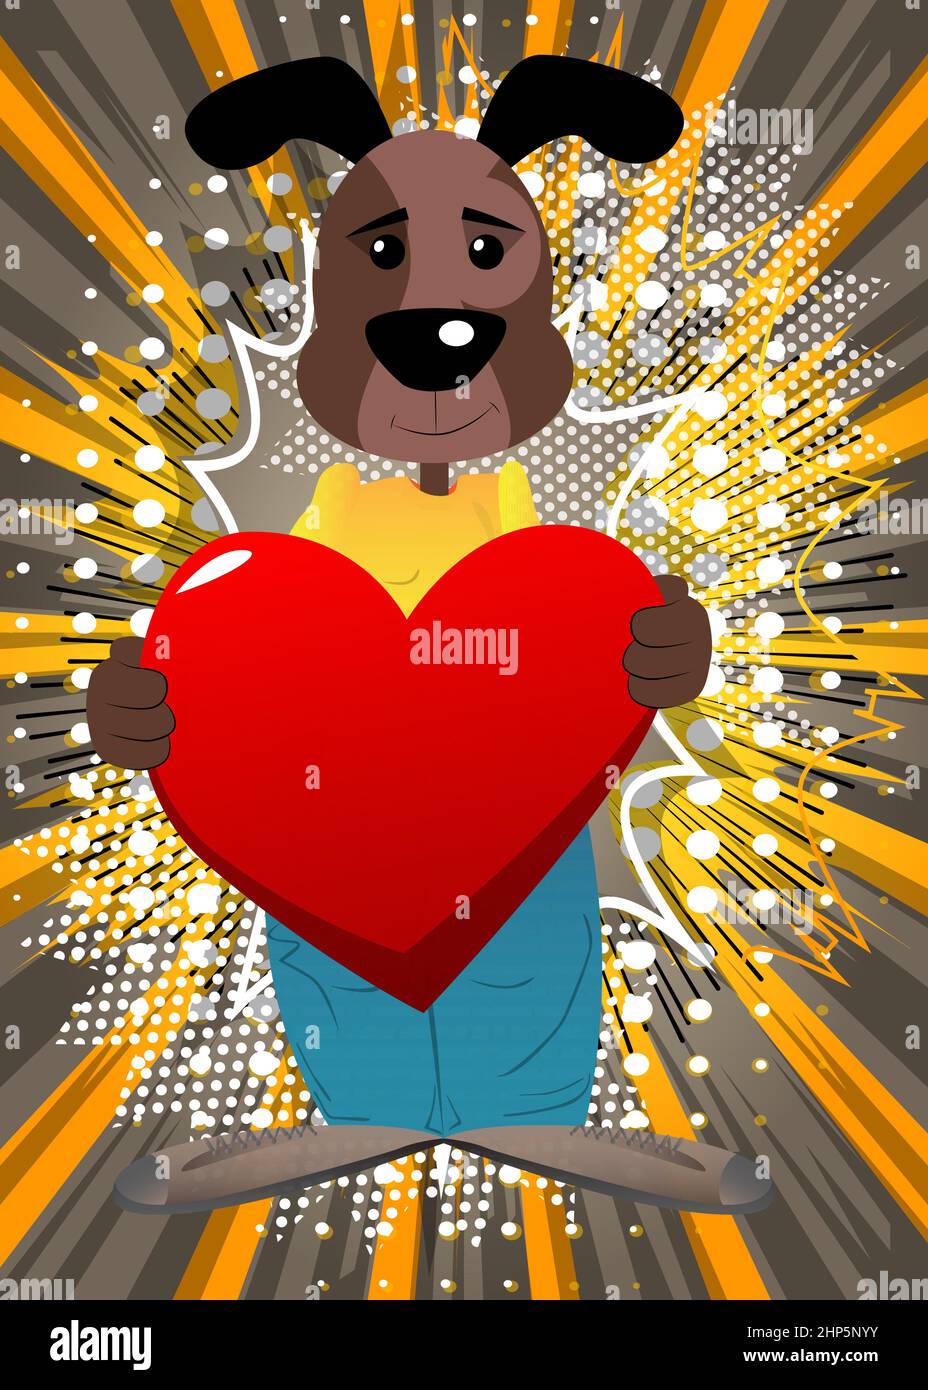 Funny cartoon dog holding big red heart. Stock Vector